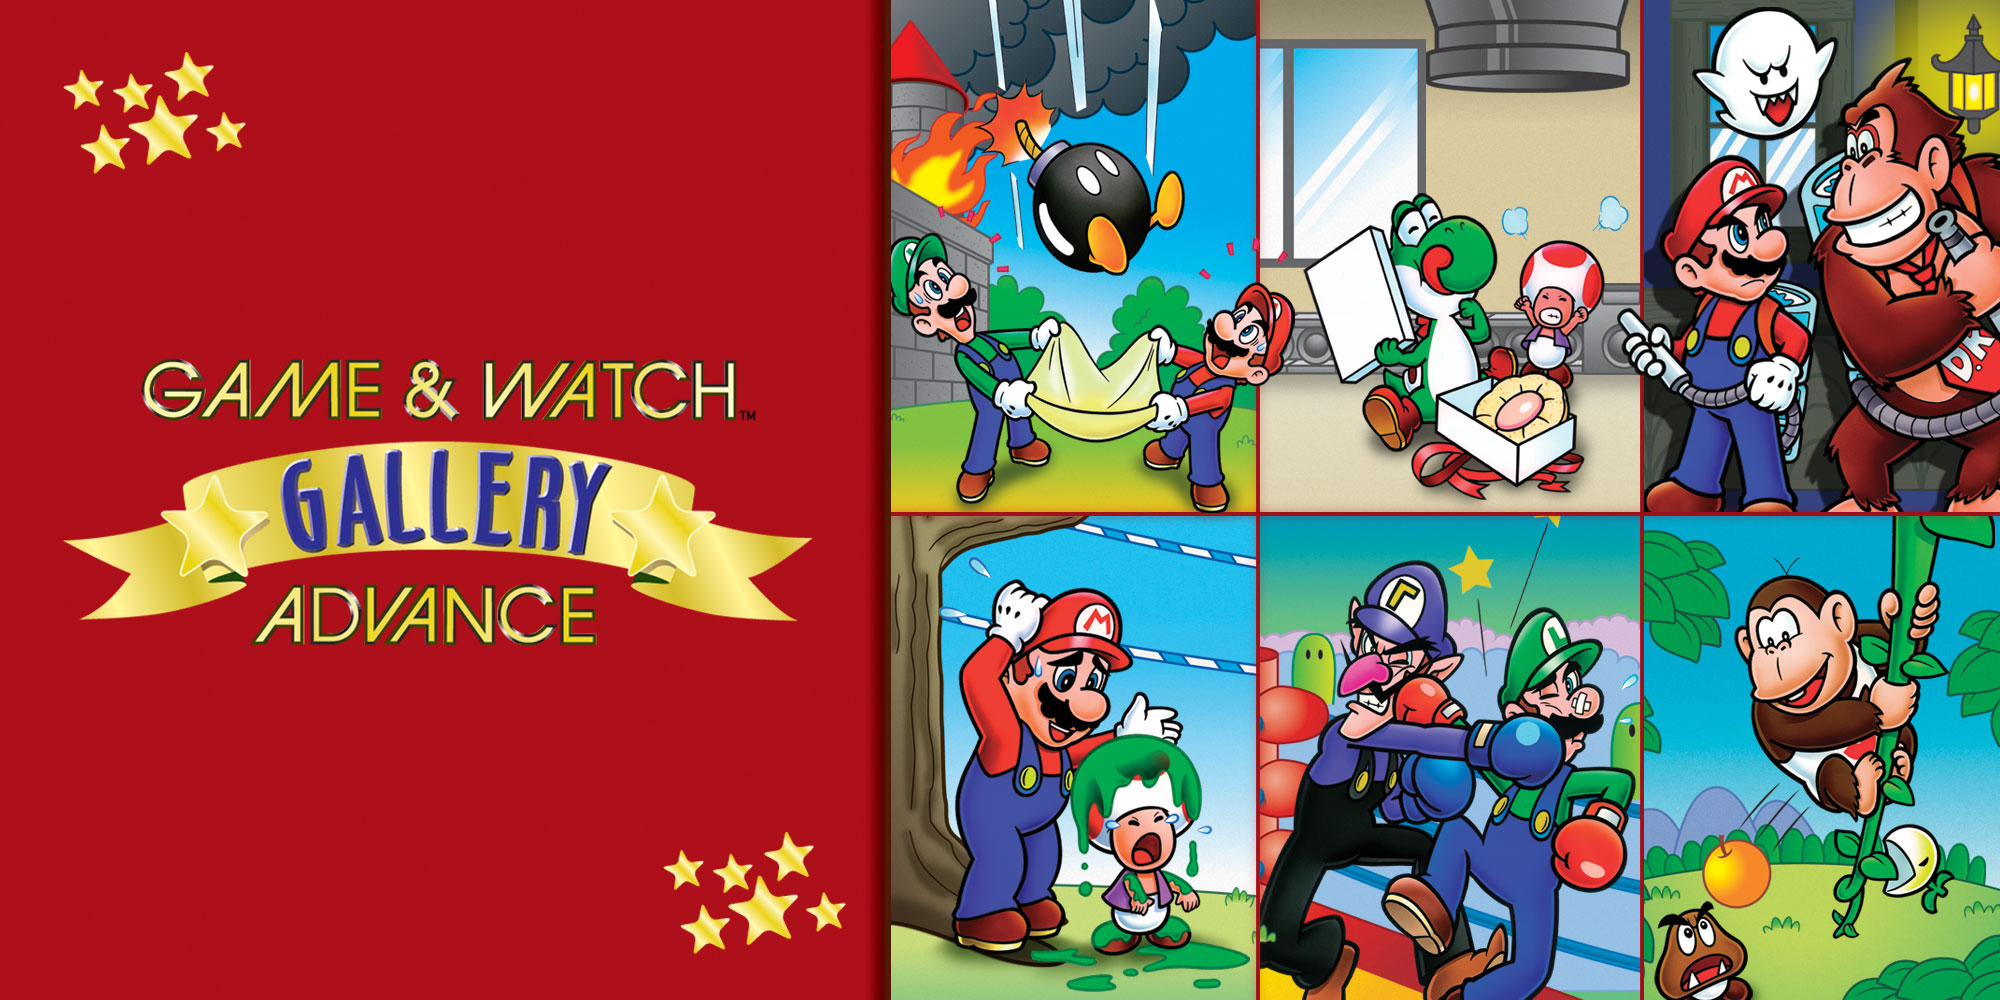 Game & Watch Gallery Advance | Game Boy Advance | Games | Nintendo